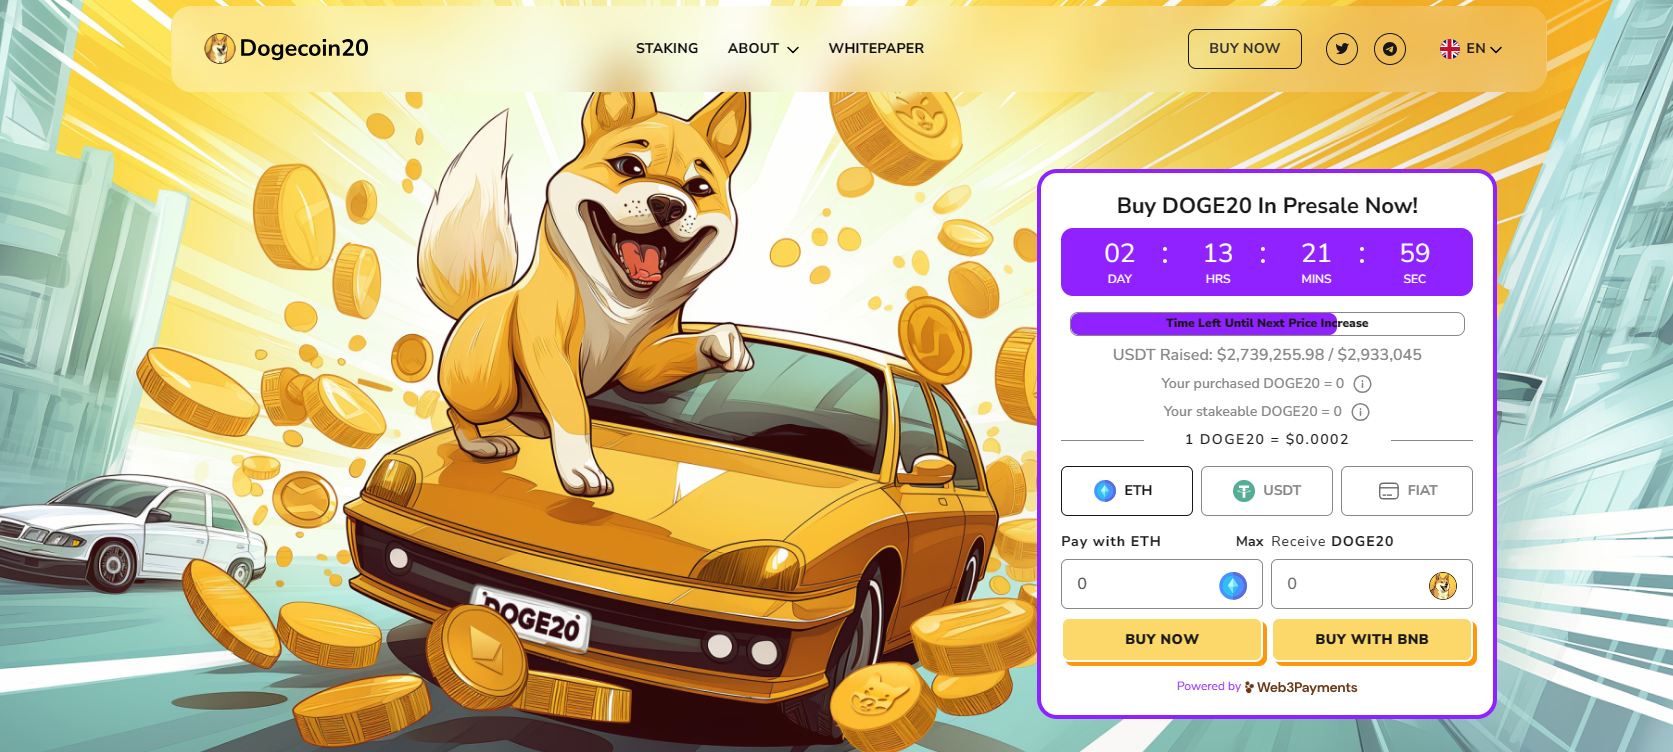 dogecoin20 homepage